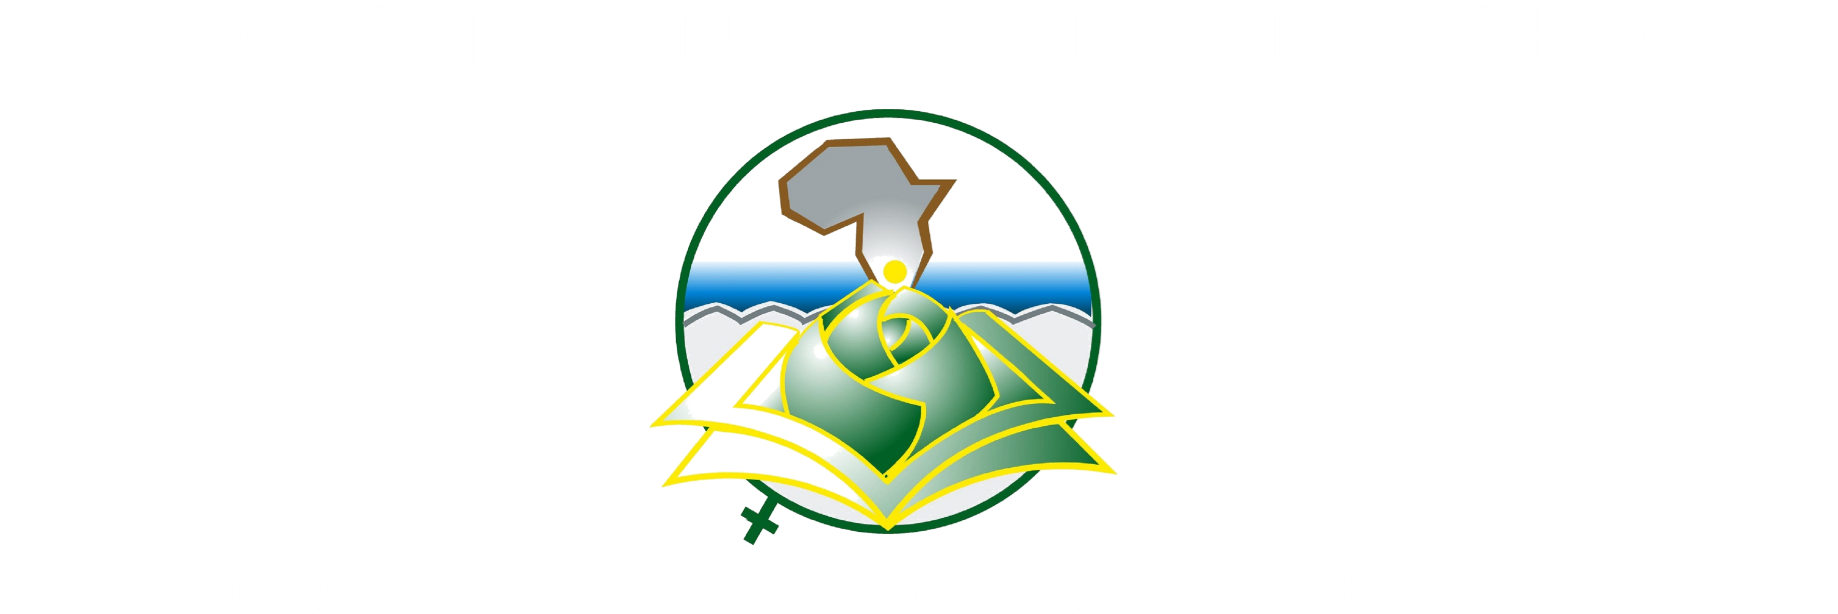 Student Portal Wua Logo - Women's University In Africa Logo (2000x712)